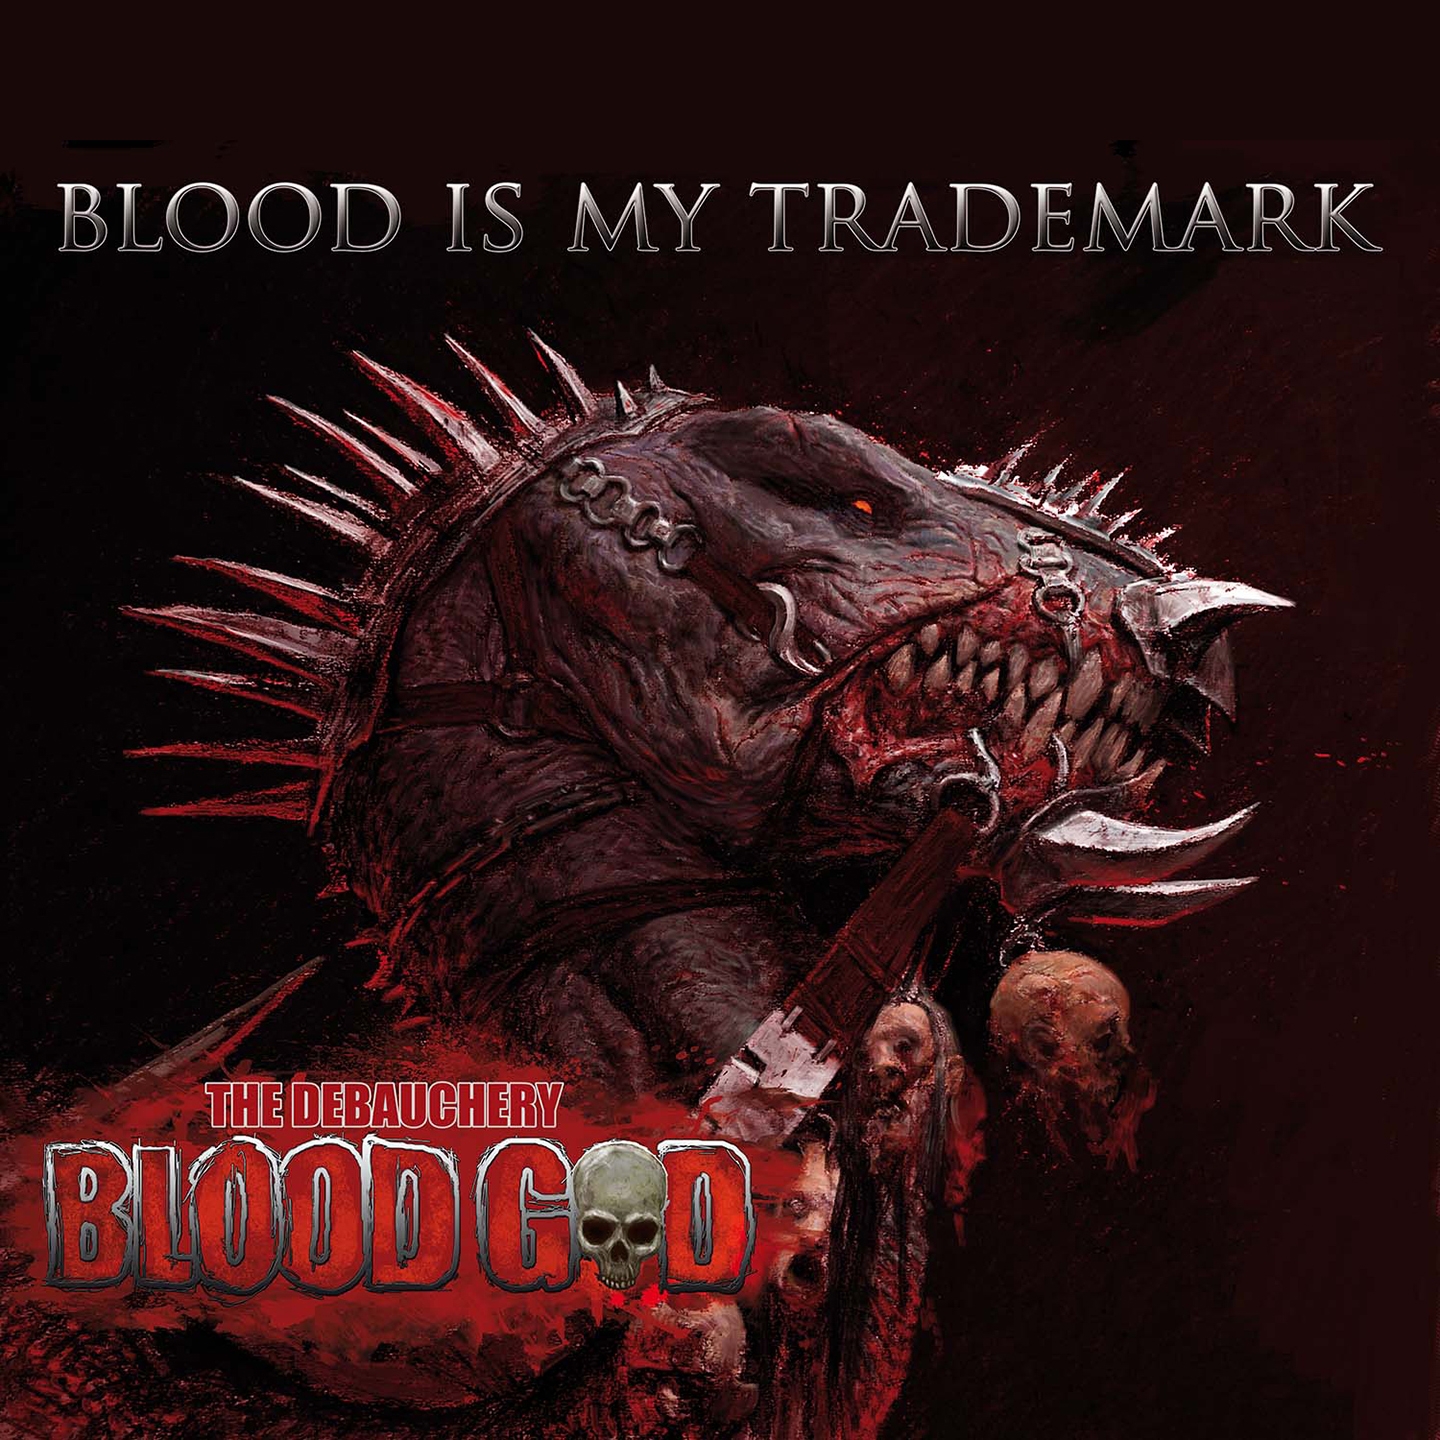 World Of Blood Gods (Debauchery Monster Voice)